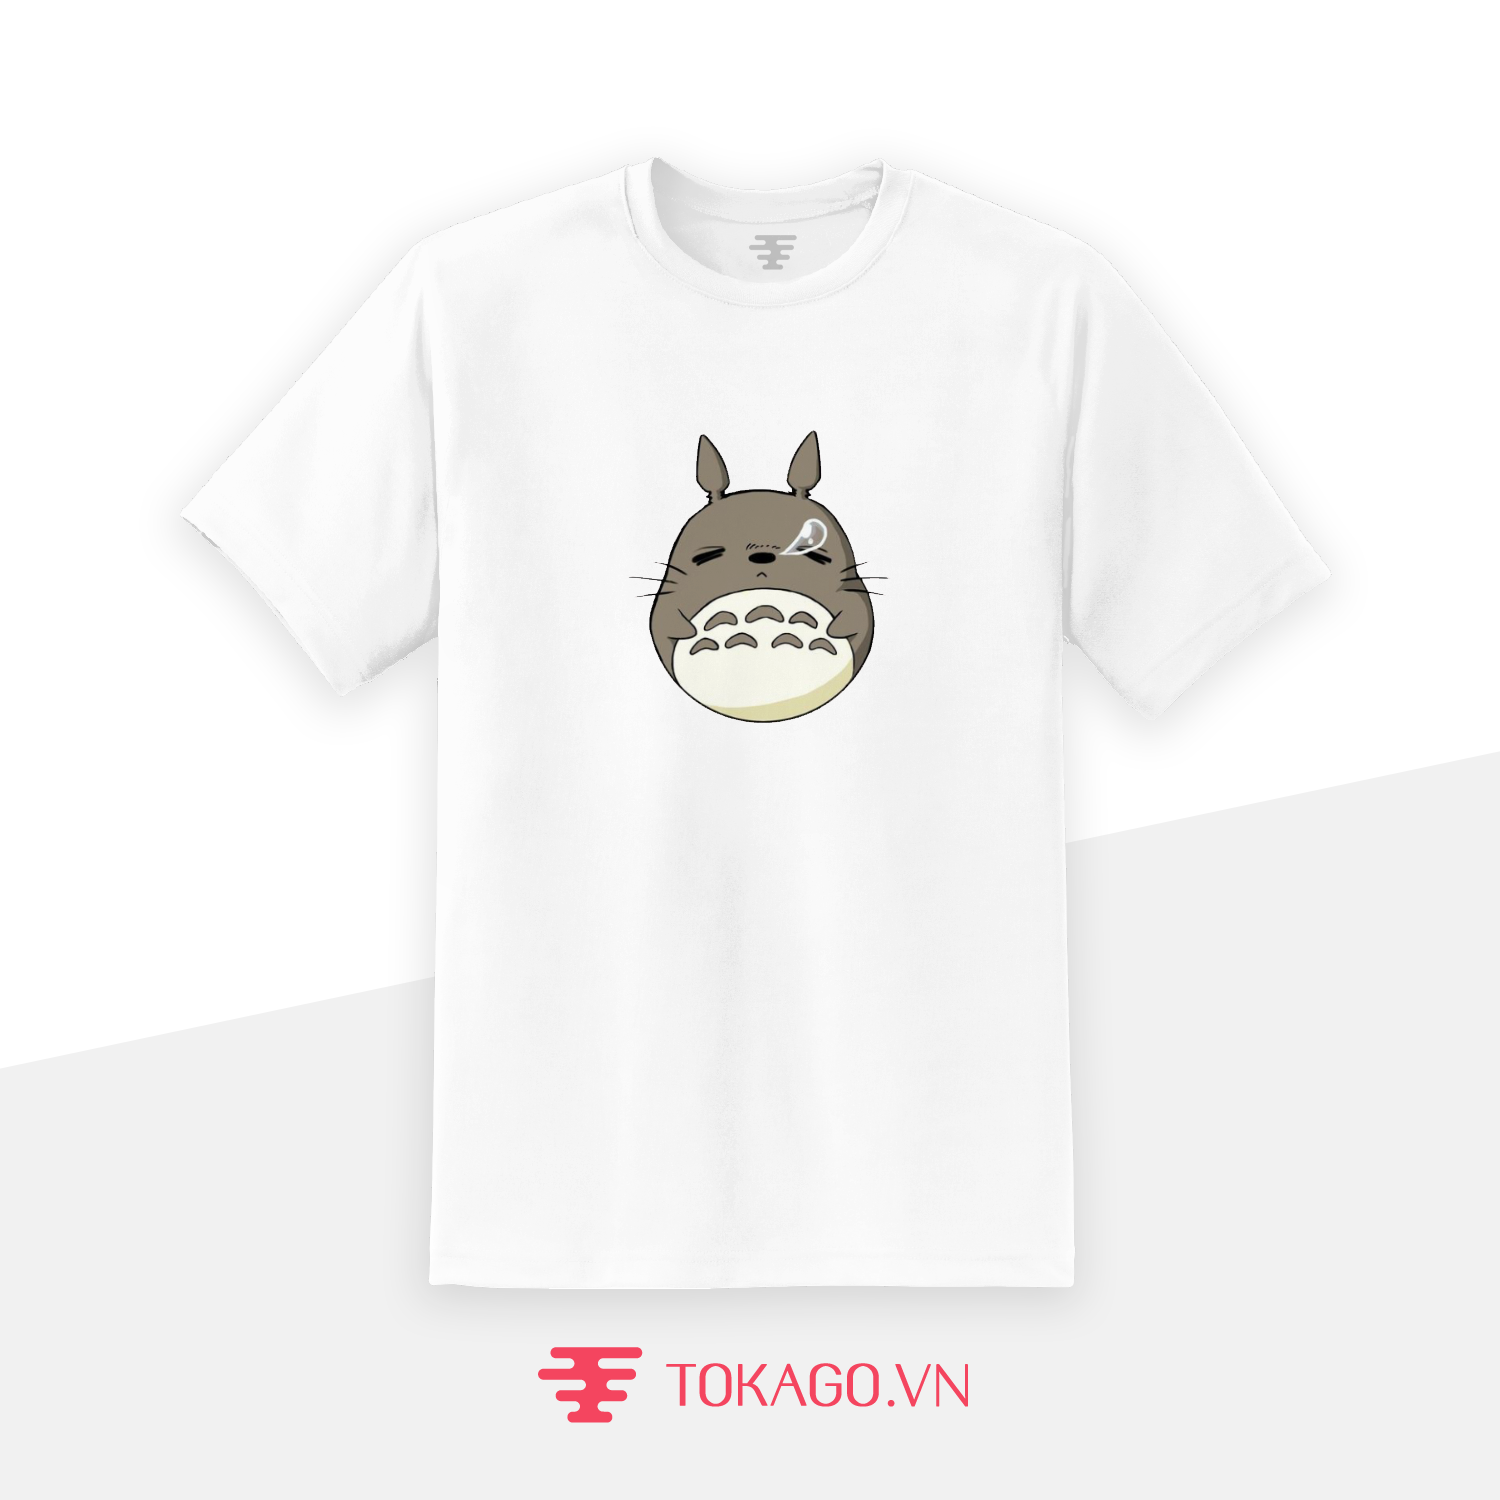 Sleeping Totoro